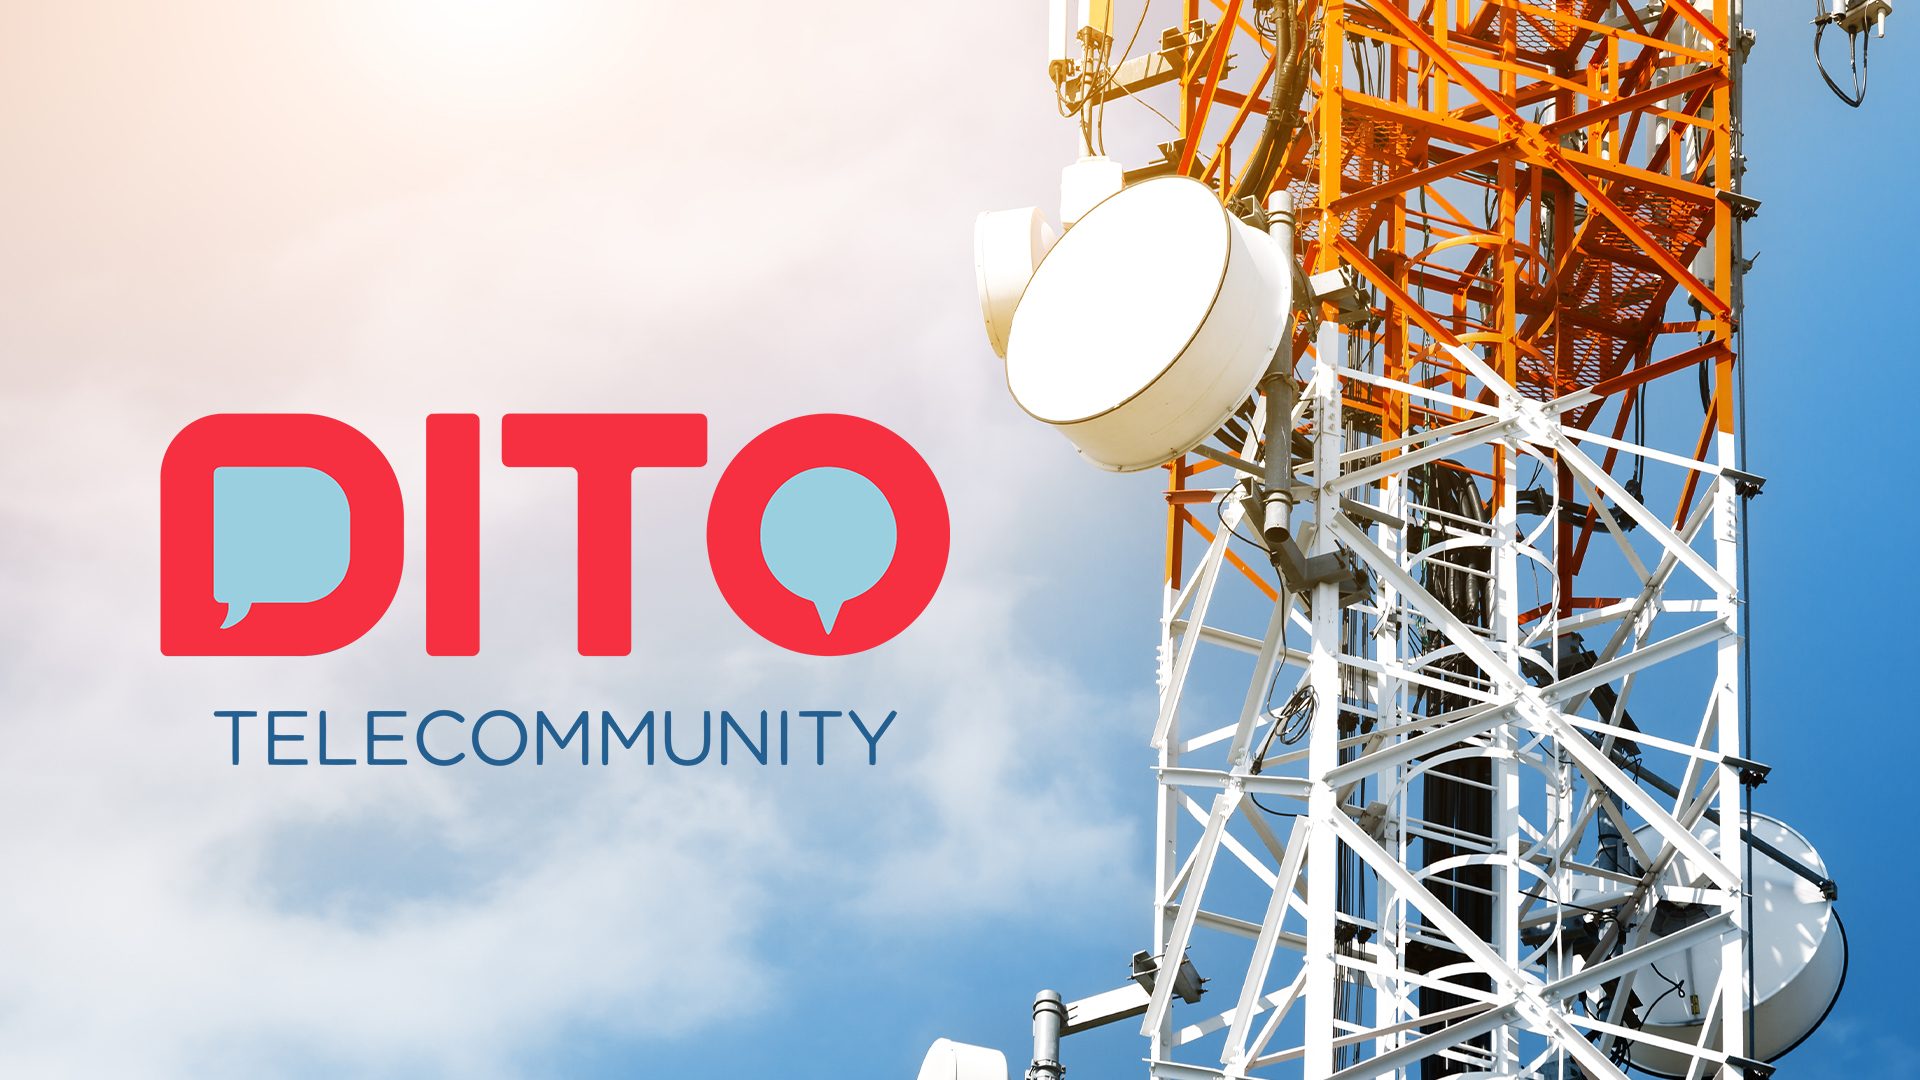 Dito Telecommunity enters Luzon